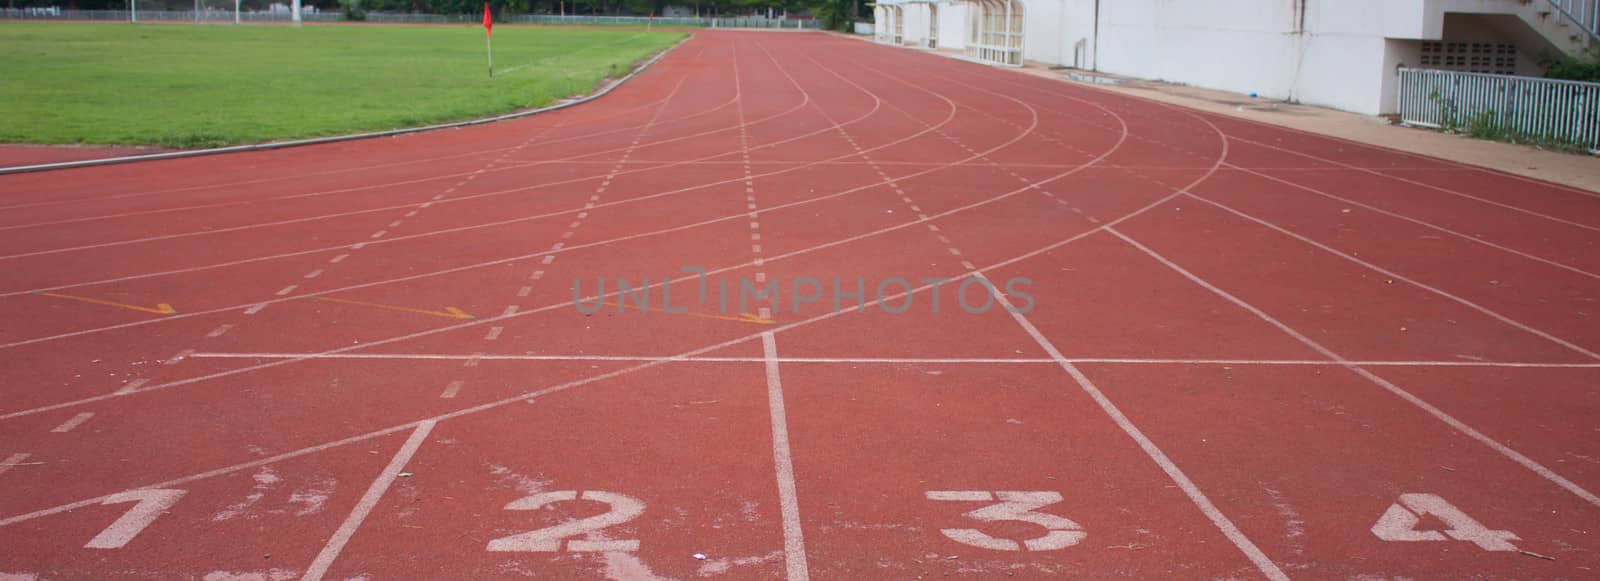 Stadium and running track